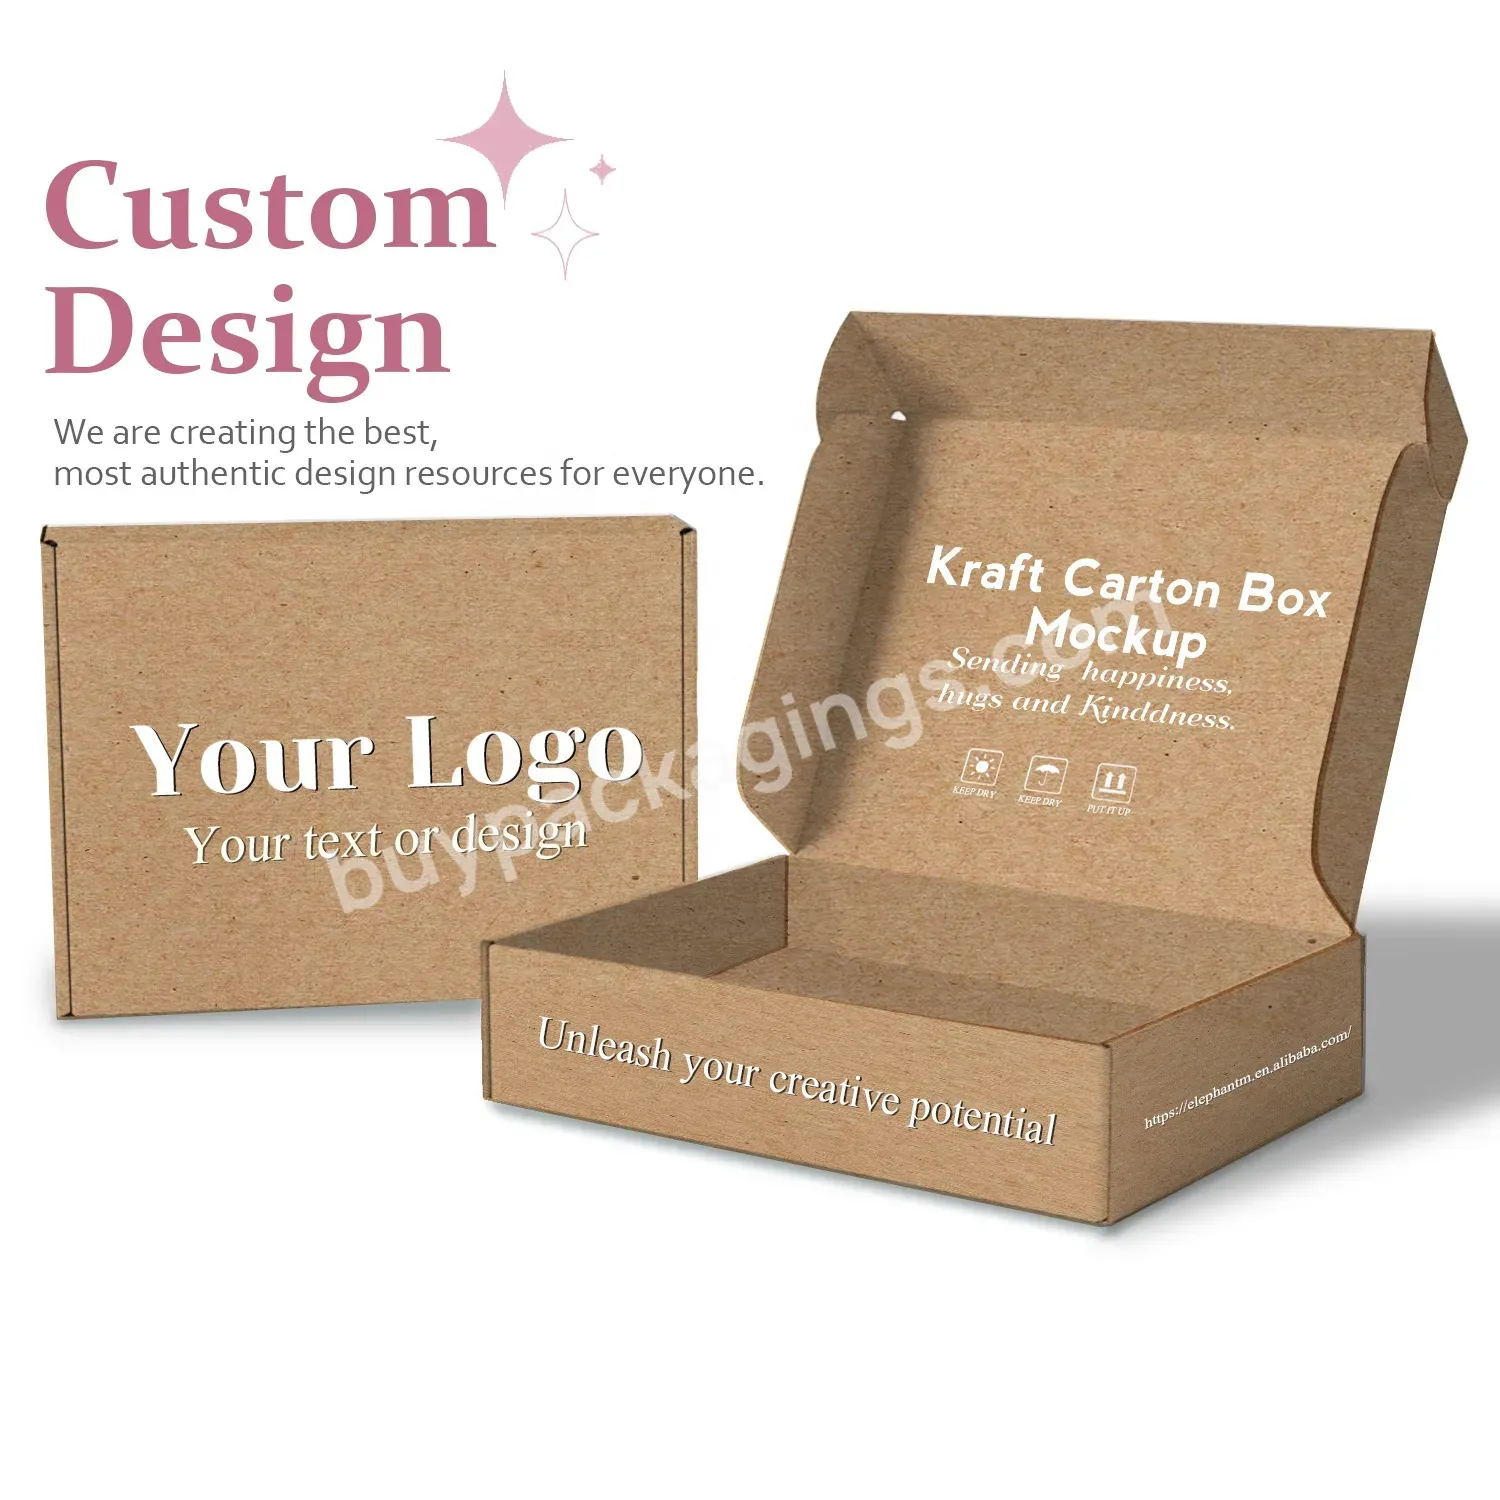 China Supplier Custom Made Standard Delivery Kraft Paper Small Folding Carton Box